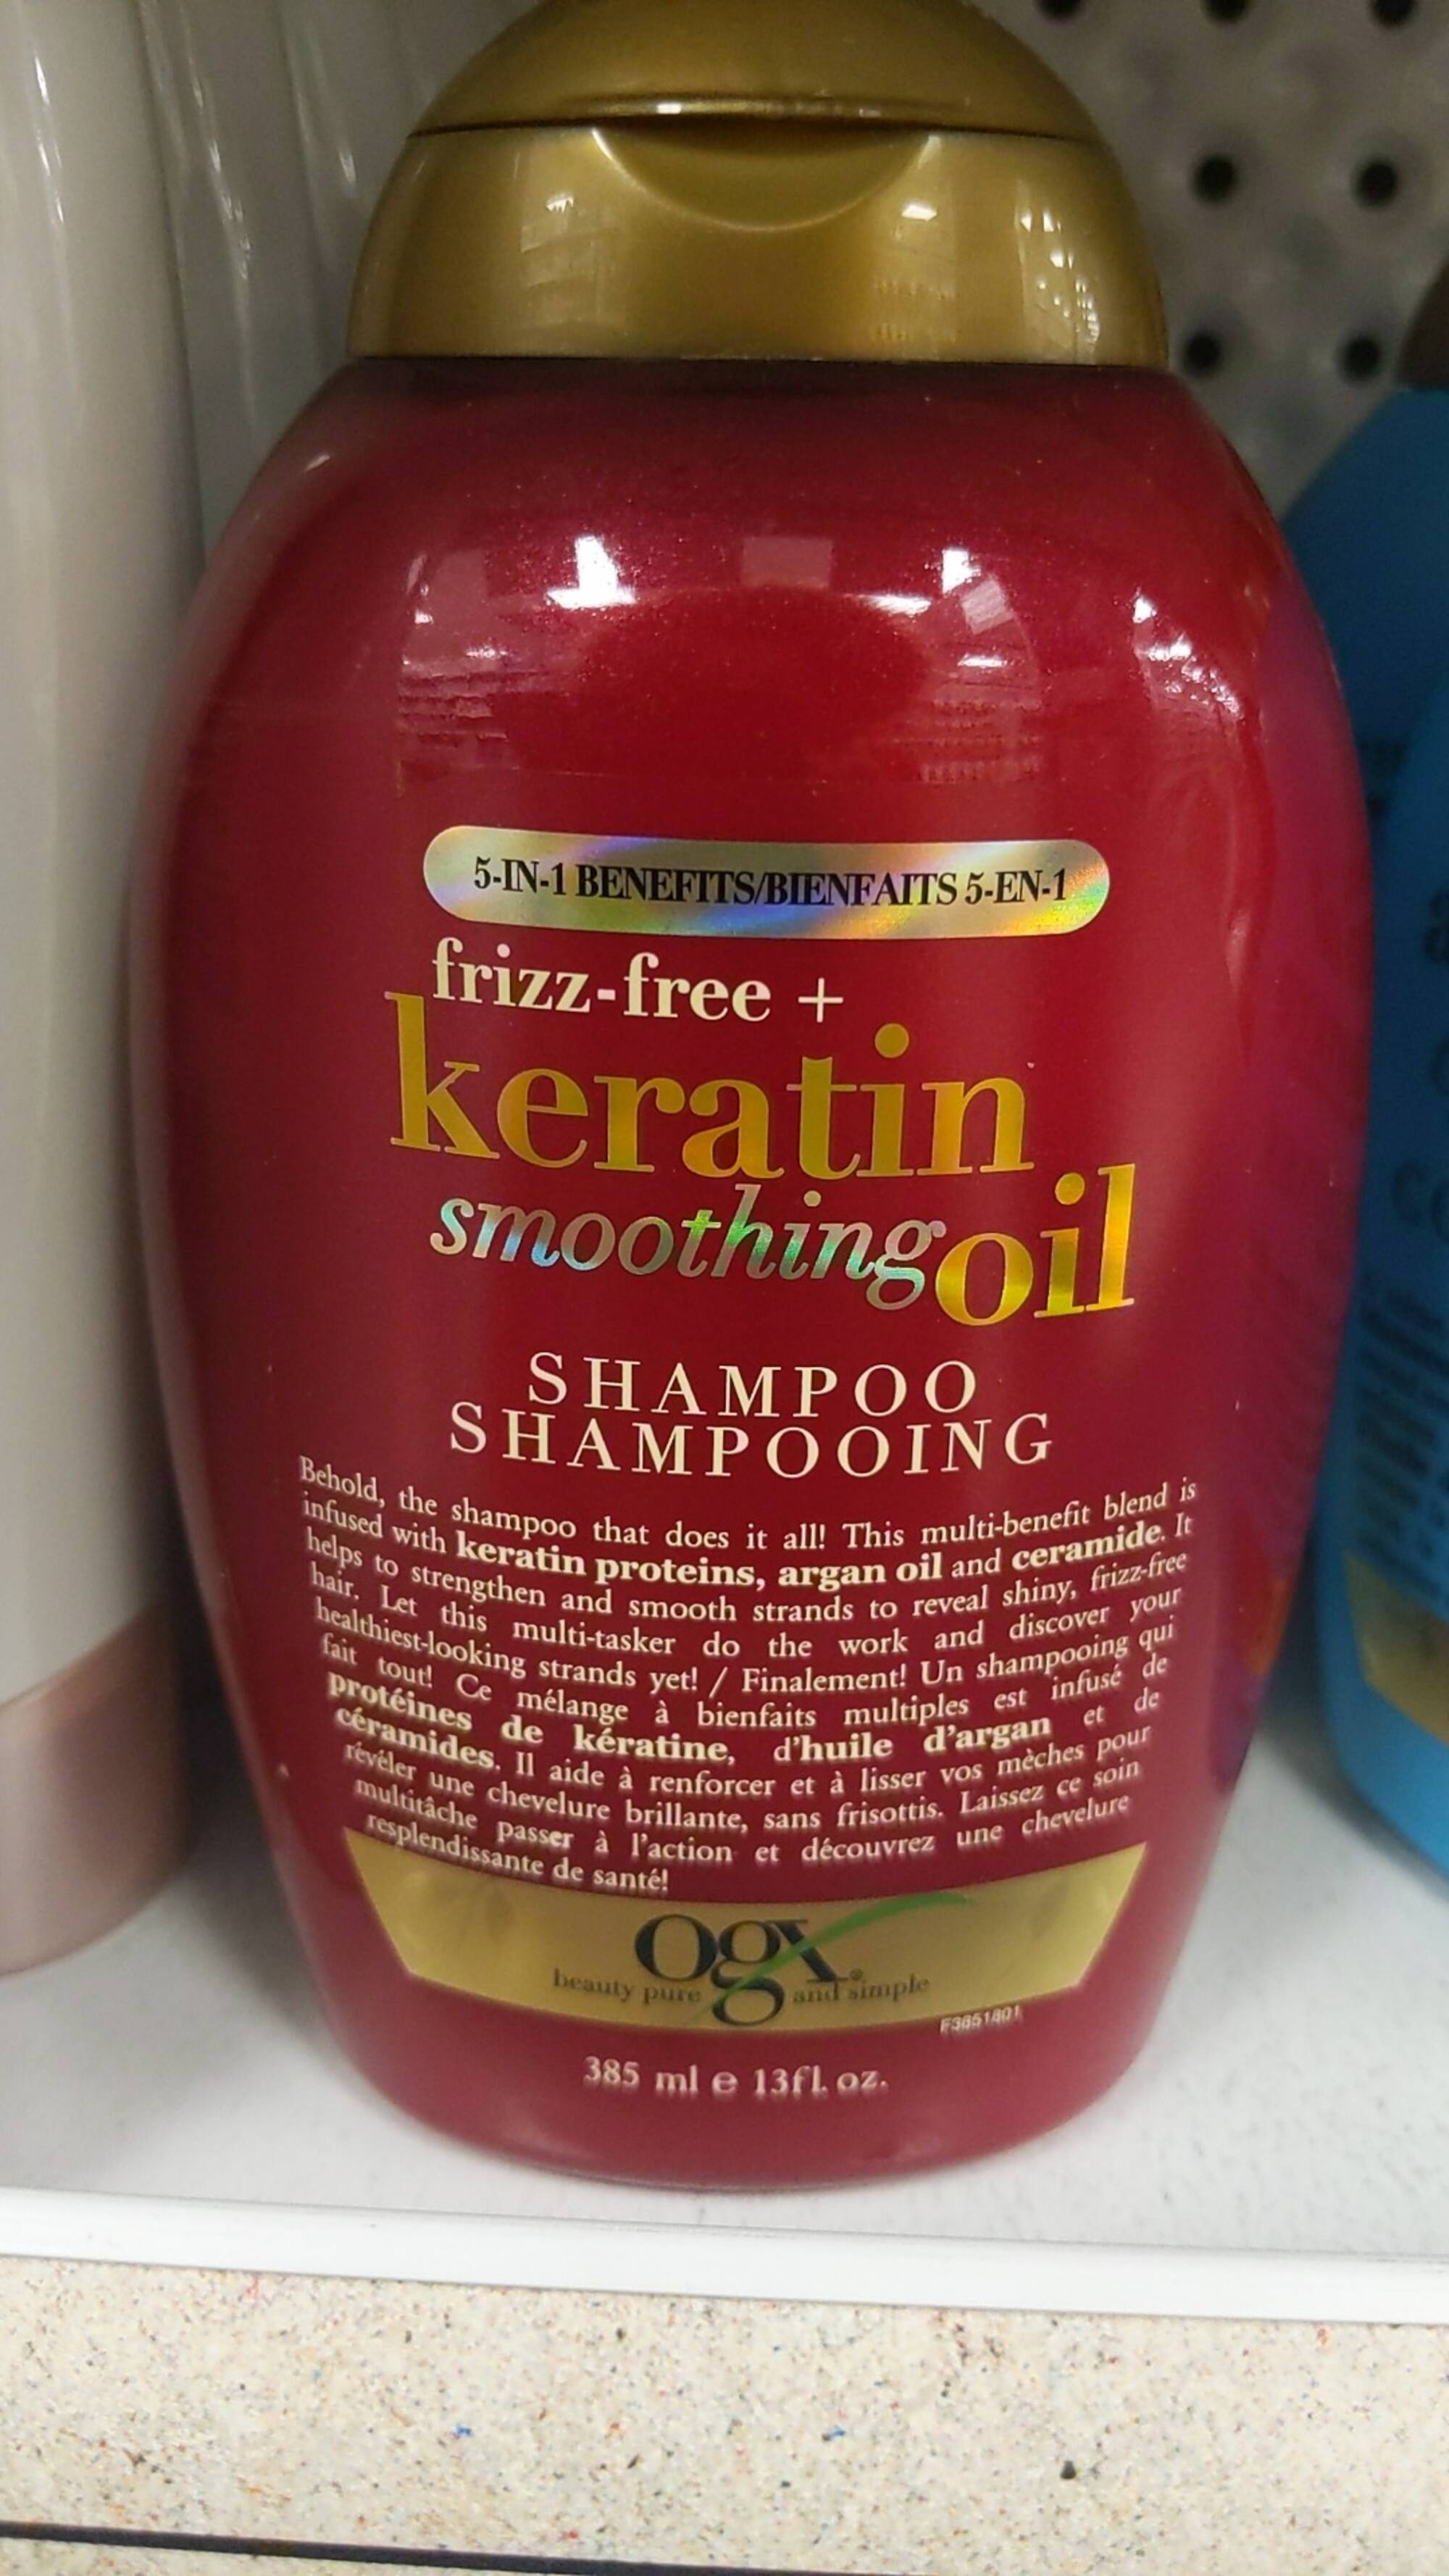 OGX - Keratin smoothing oil - Shampooing